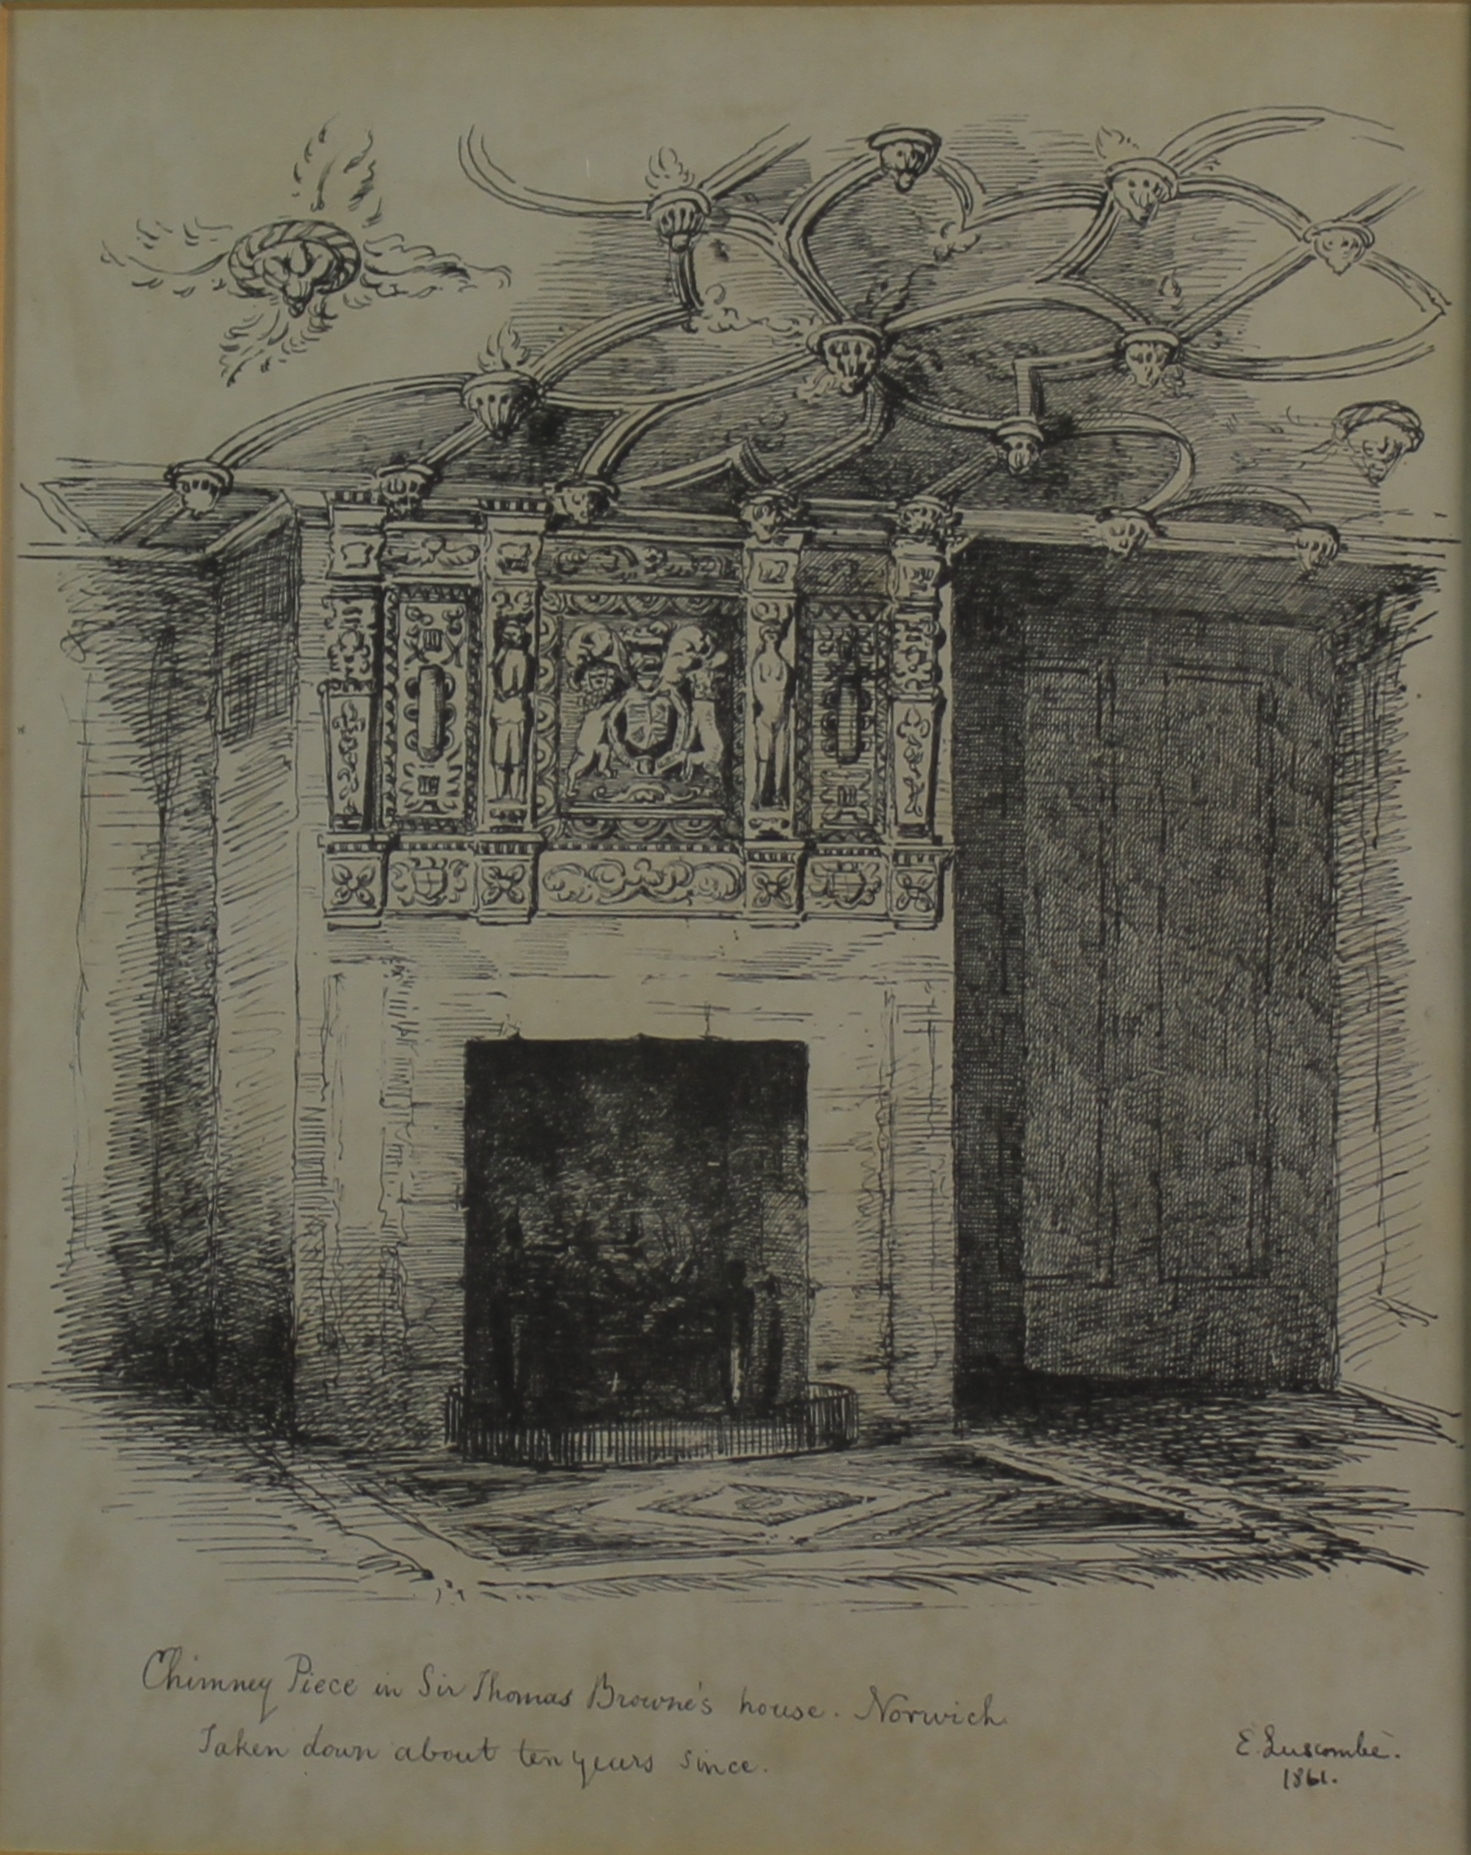 Ellen Luscombe, (19th Century, British), "Chimney piece in Sir Thomas Browne's House, Norwich, taken - Image 2 of 2